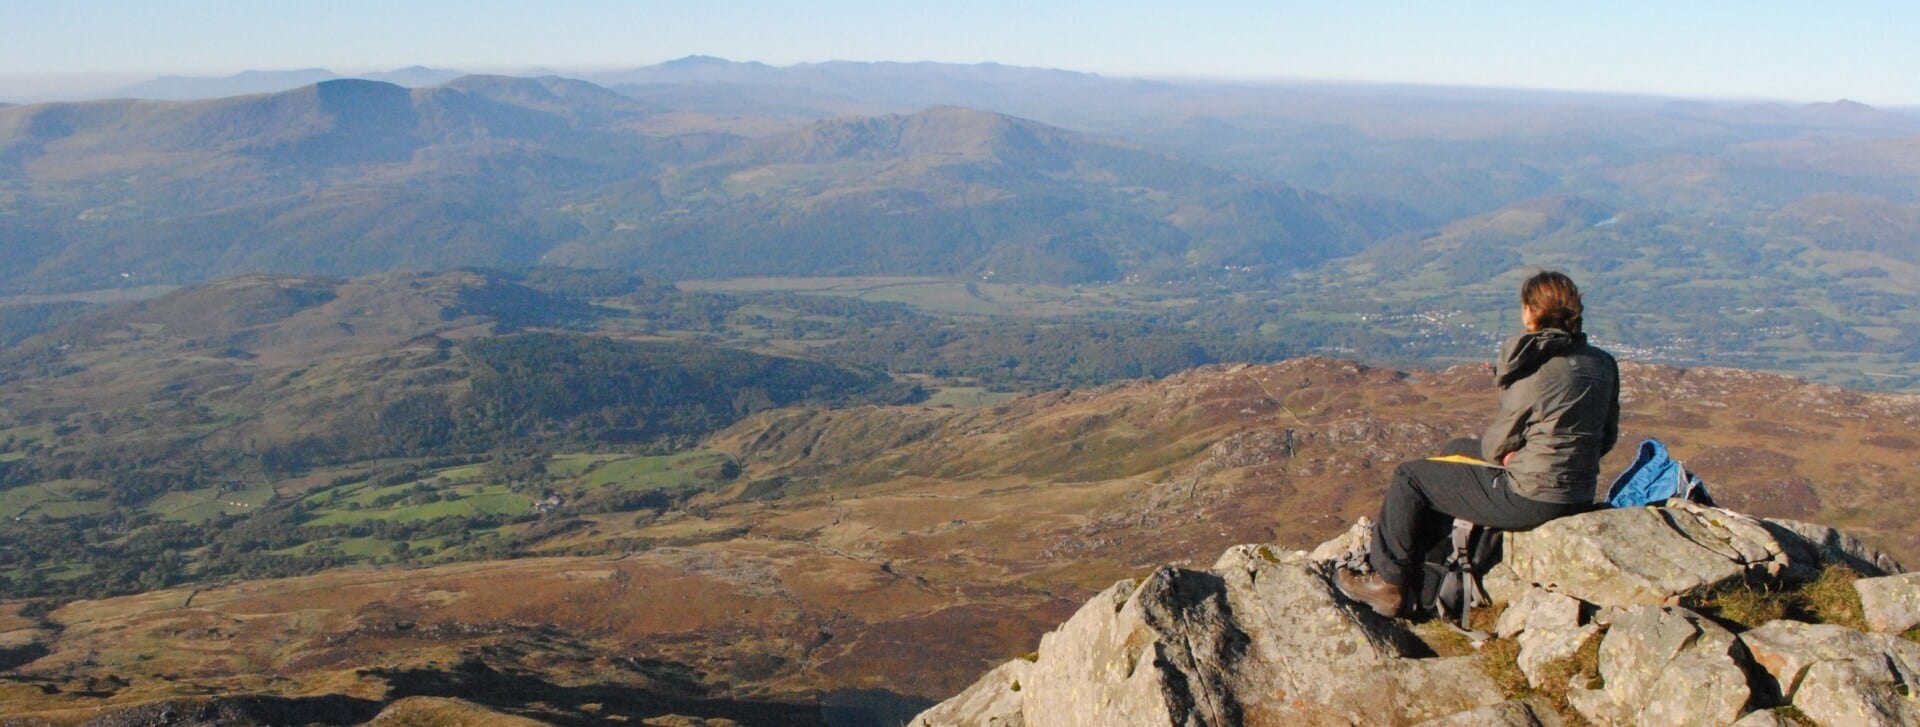 Cadair Idris mountain, viewable from Treks Bunkhouse